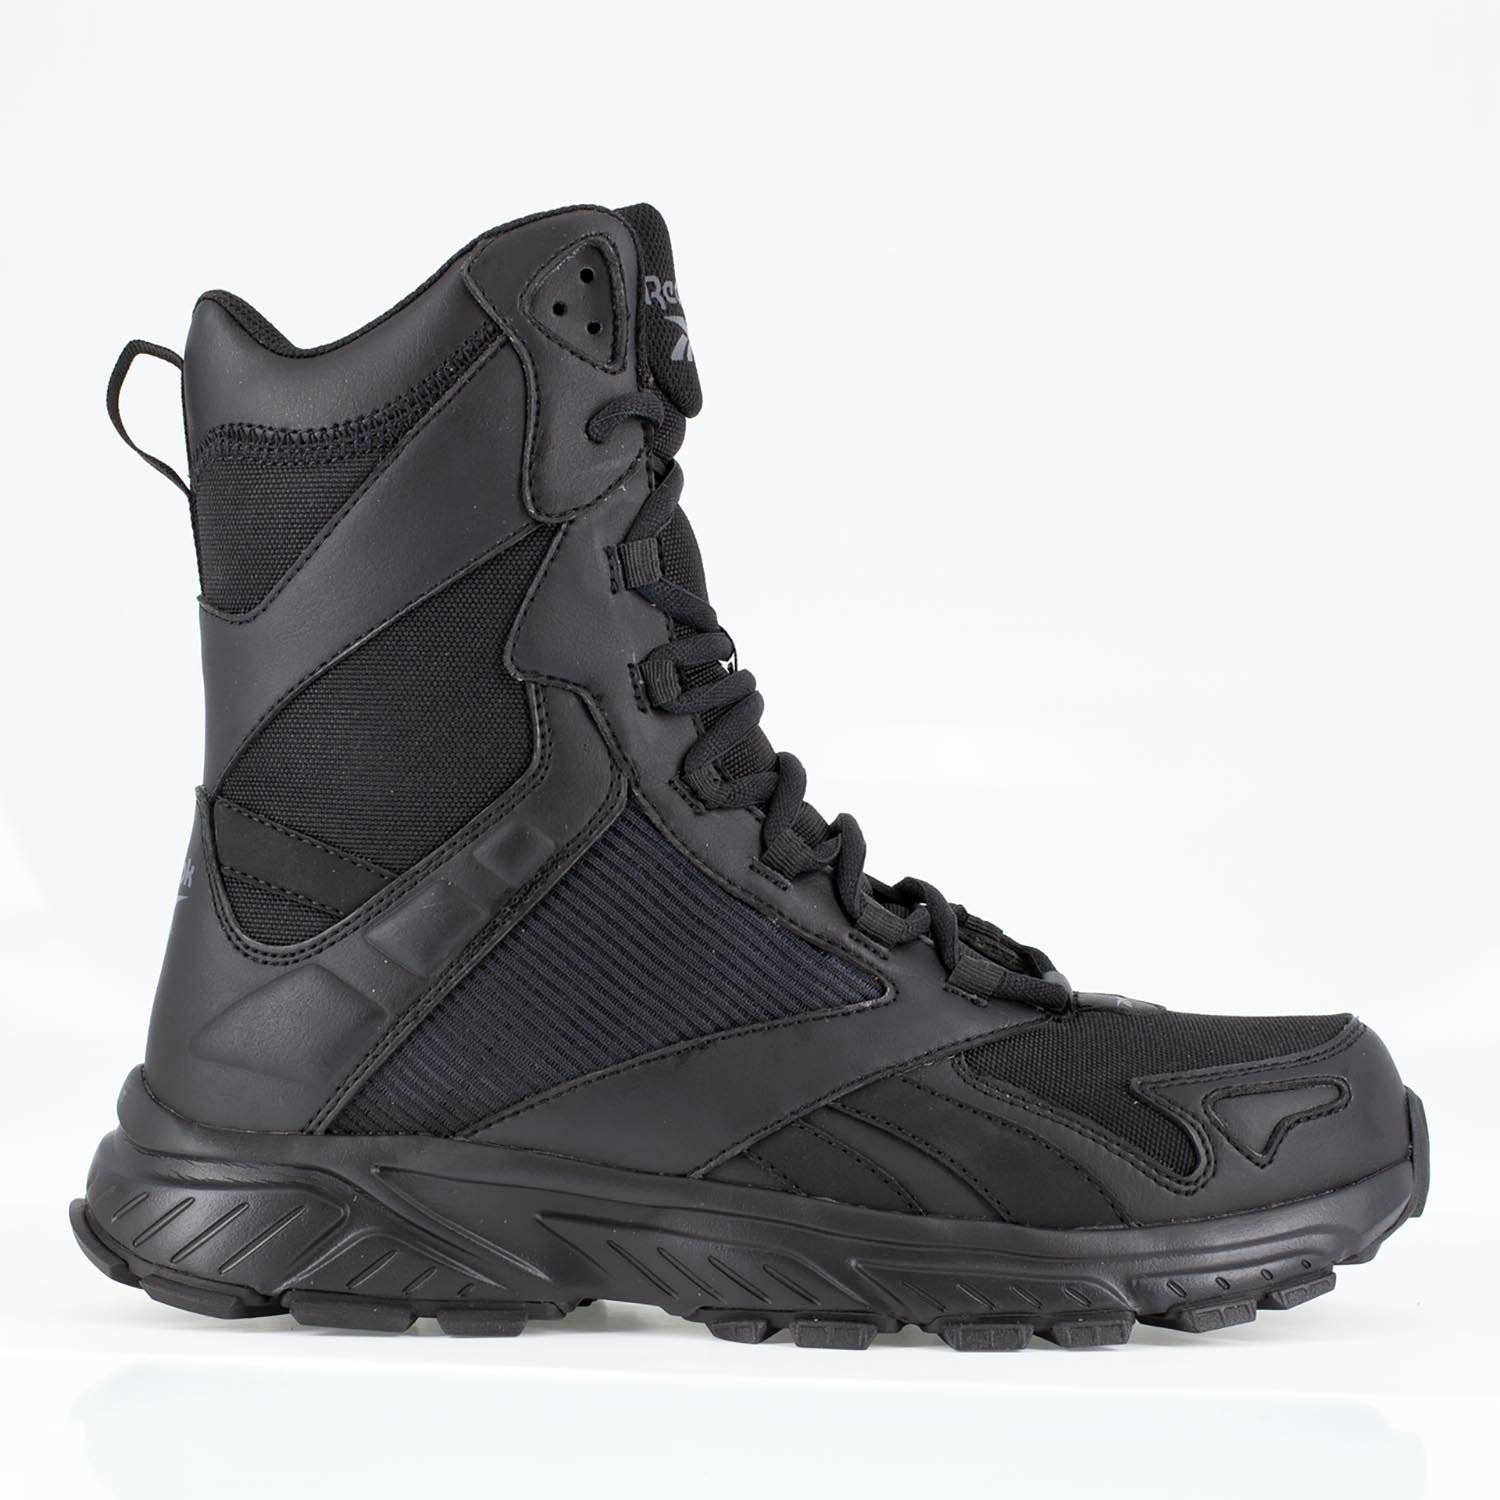 Reebok Men's 8" Hyperium Side Zip Tactical Boots